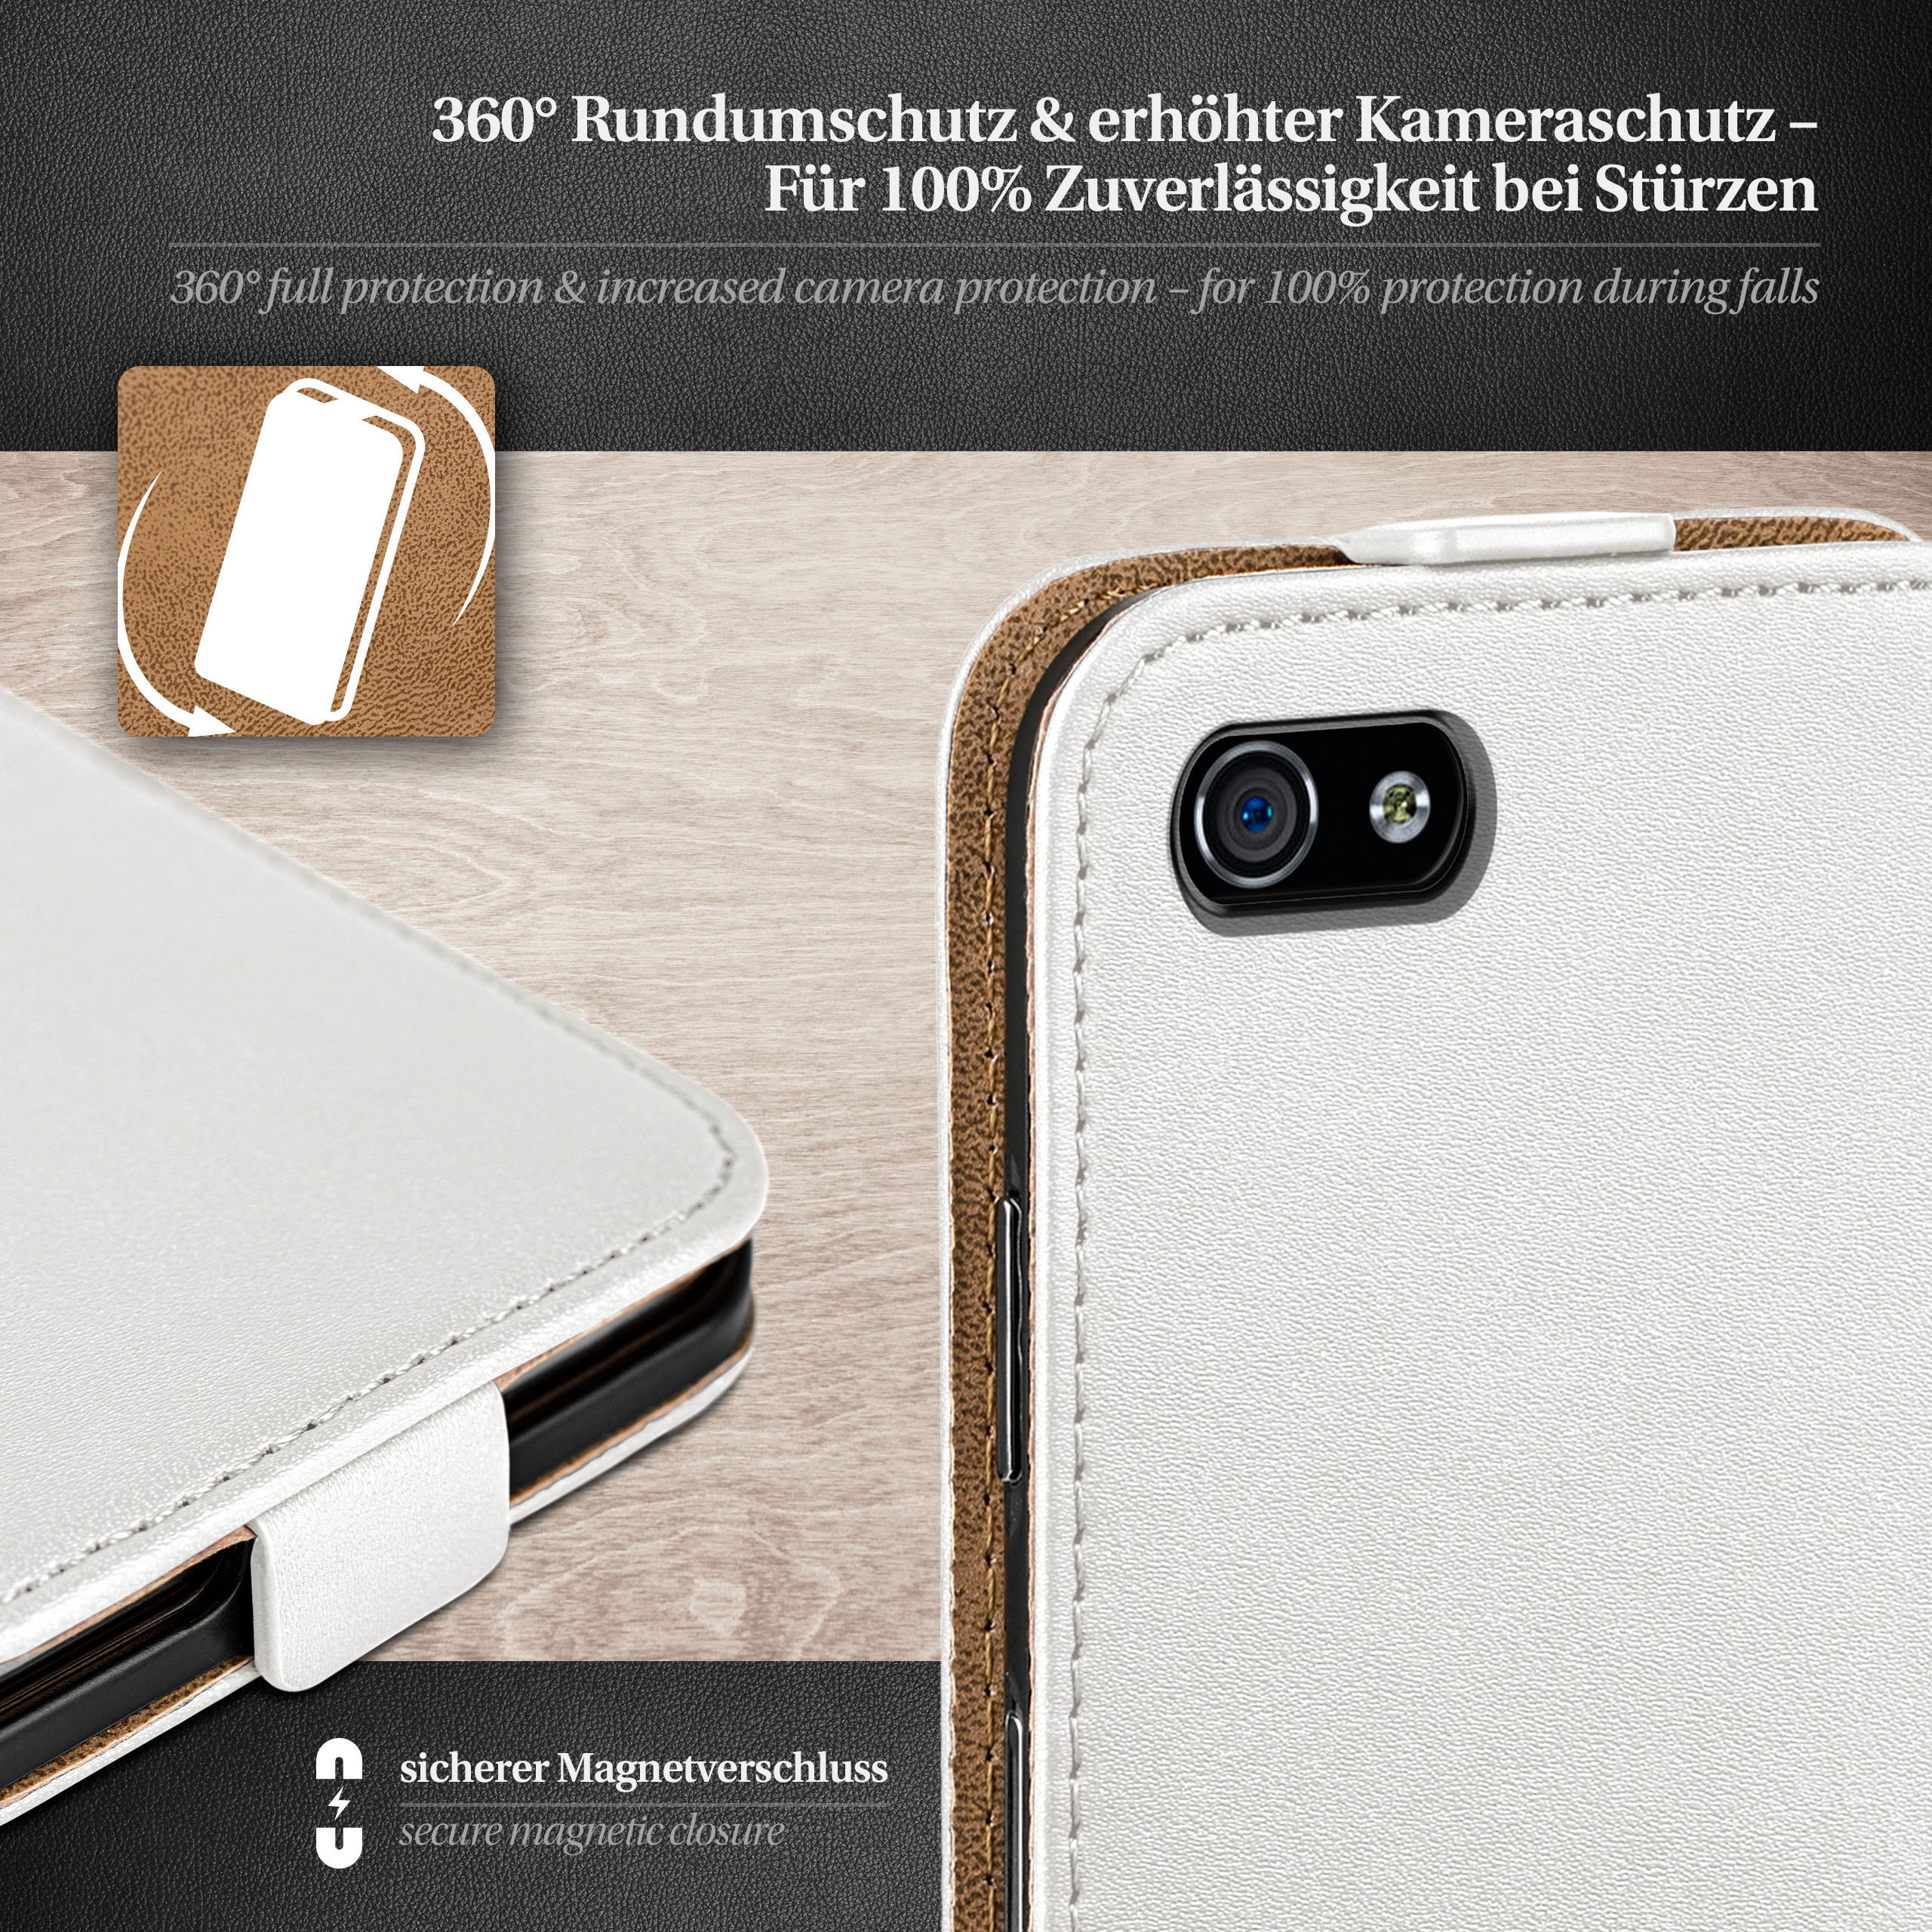 / 4, MOEX Flip iPhone Apple, iPhone Case, Pearl-White Cover, Flip 4s